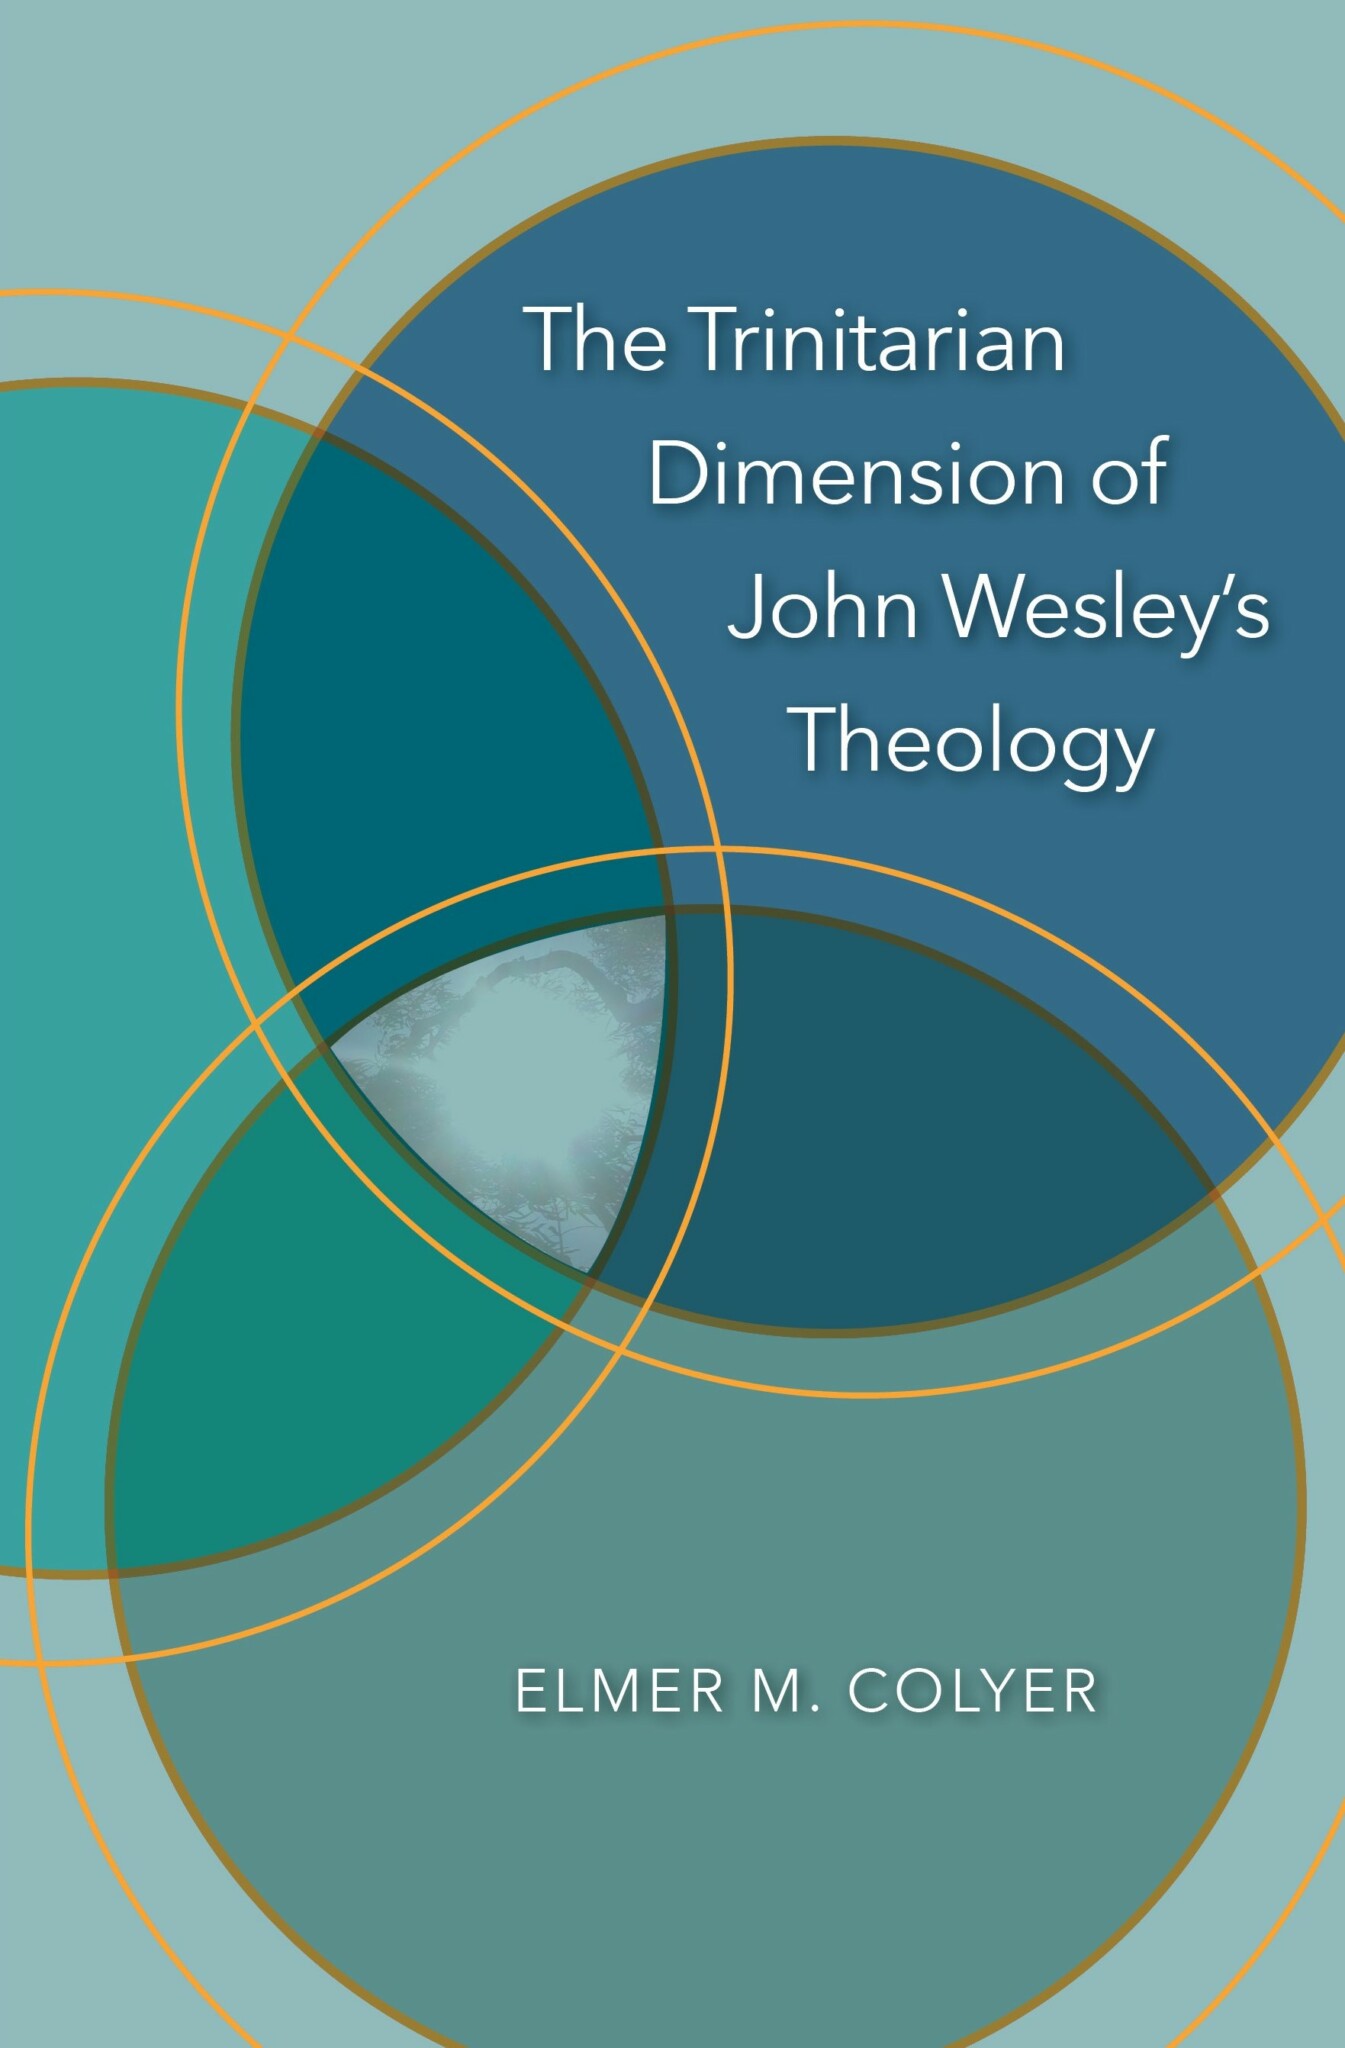 The Trinitarian Dimension of John Wesley’s Theology